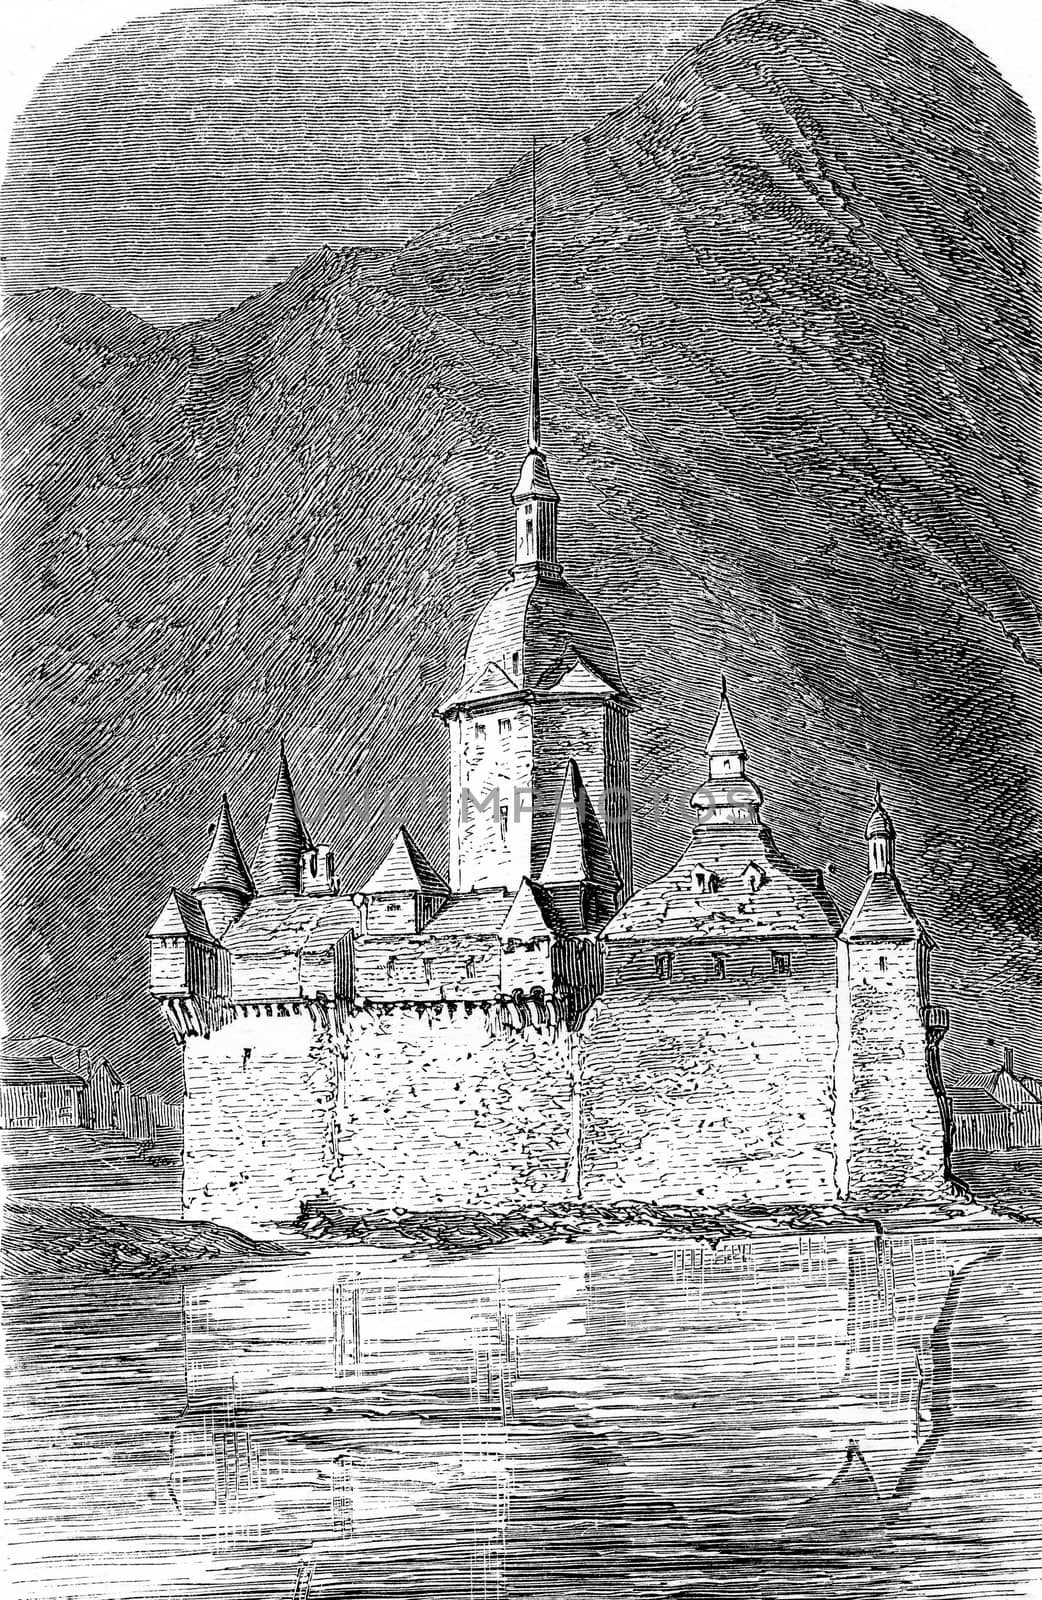 Pfalzgrafenstein Castle, vintage engraved illustration. From Chemin des Ecoliers, 1861.
